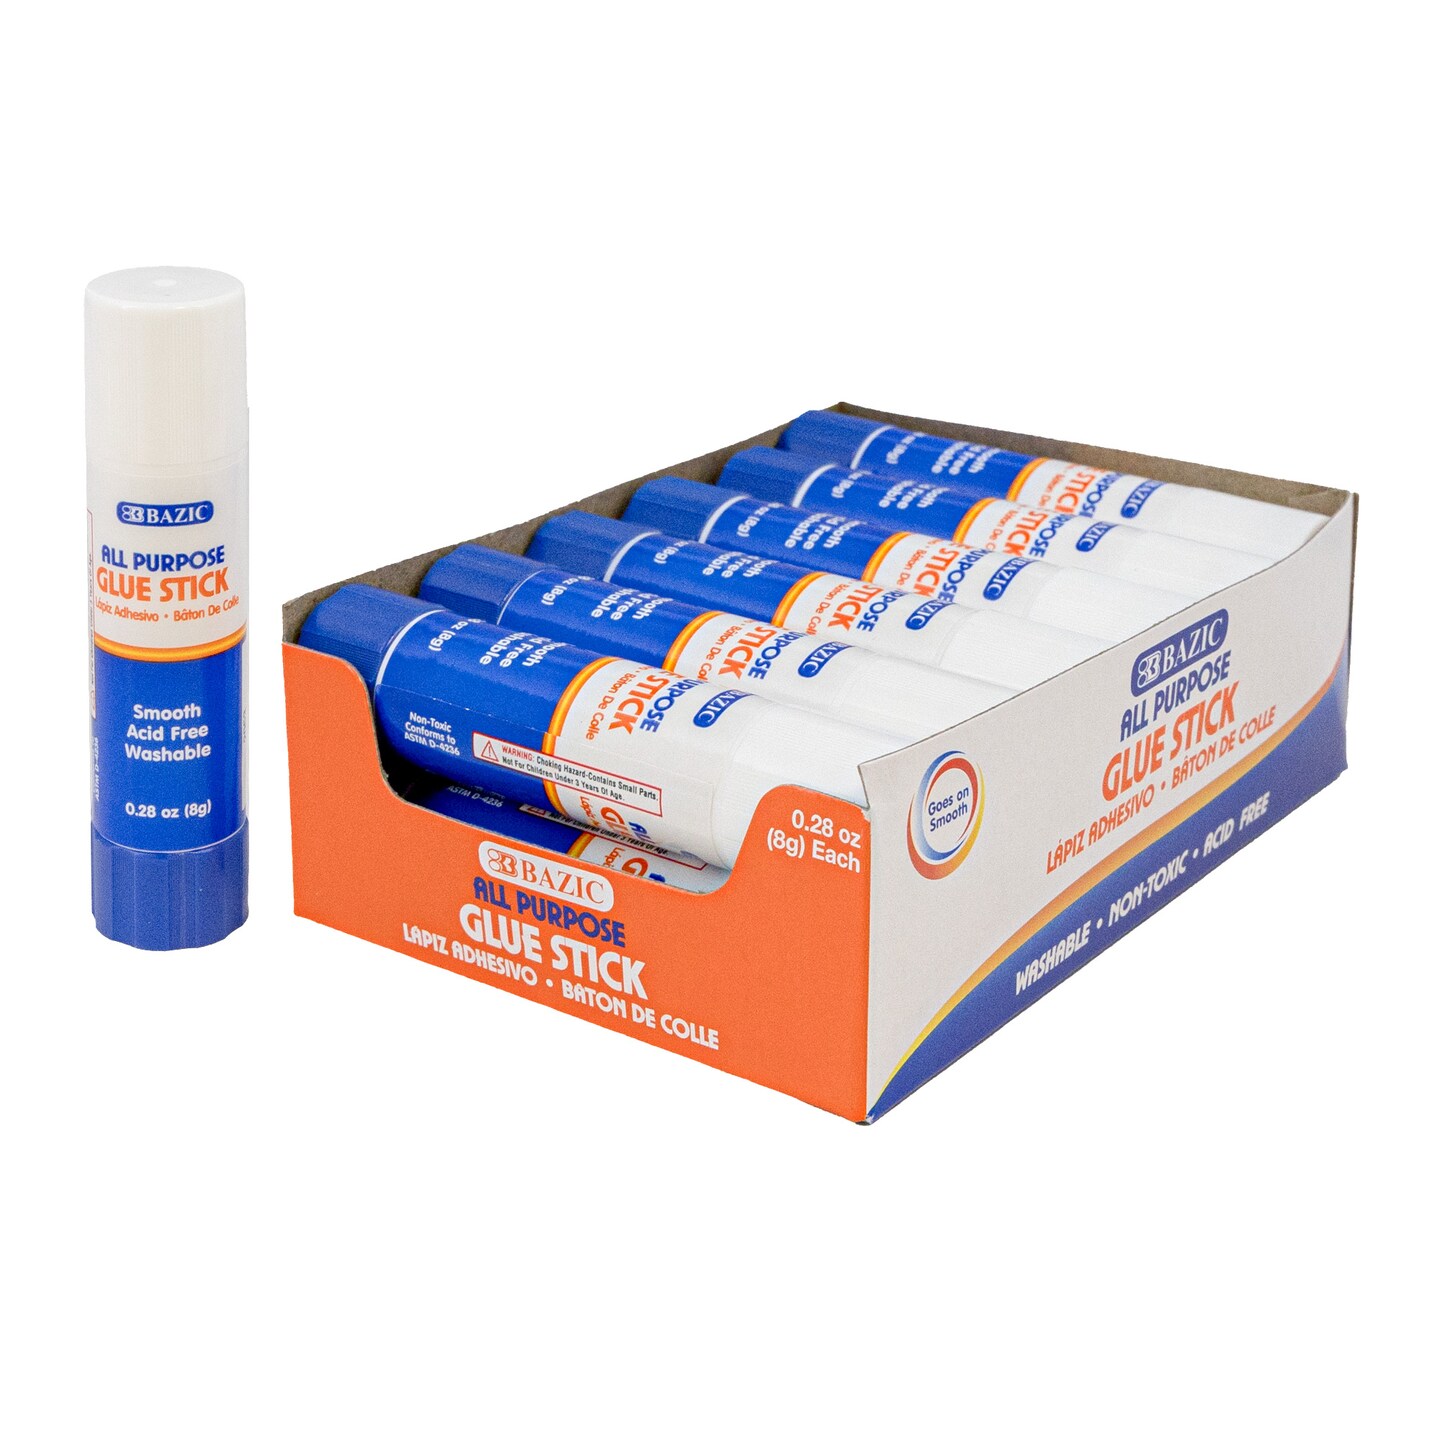 BAZIC Glue Stick Premium Pack 0.28 oz (8g)